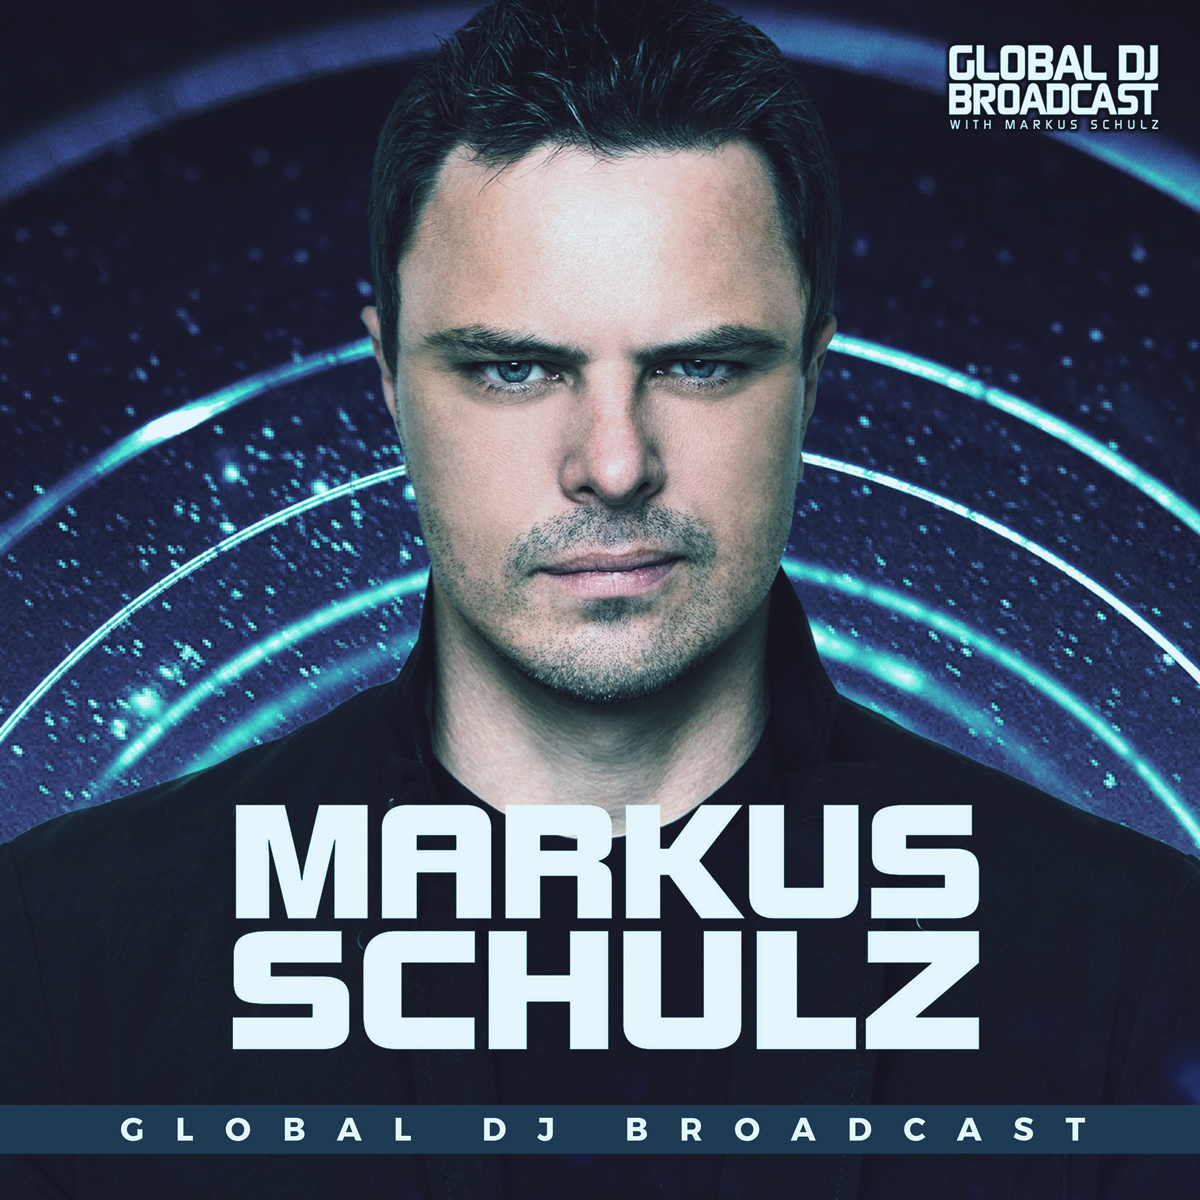 Global DJ Broadcast: Markus Schulz World Tour Montreal (Oct 12 2017)